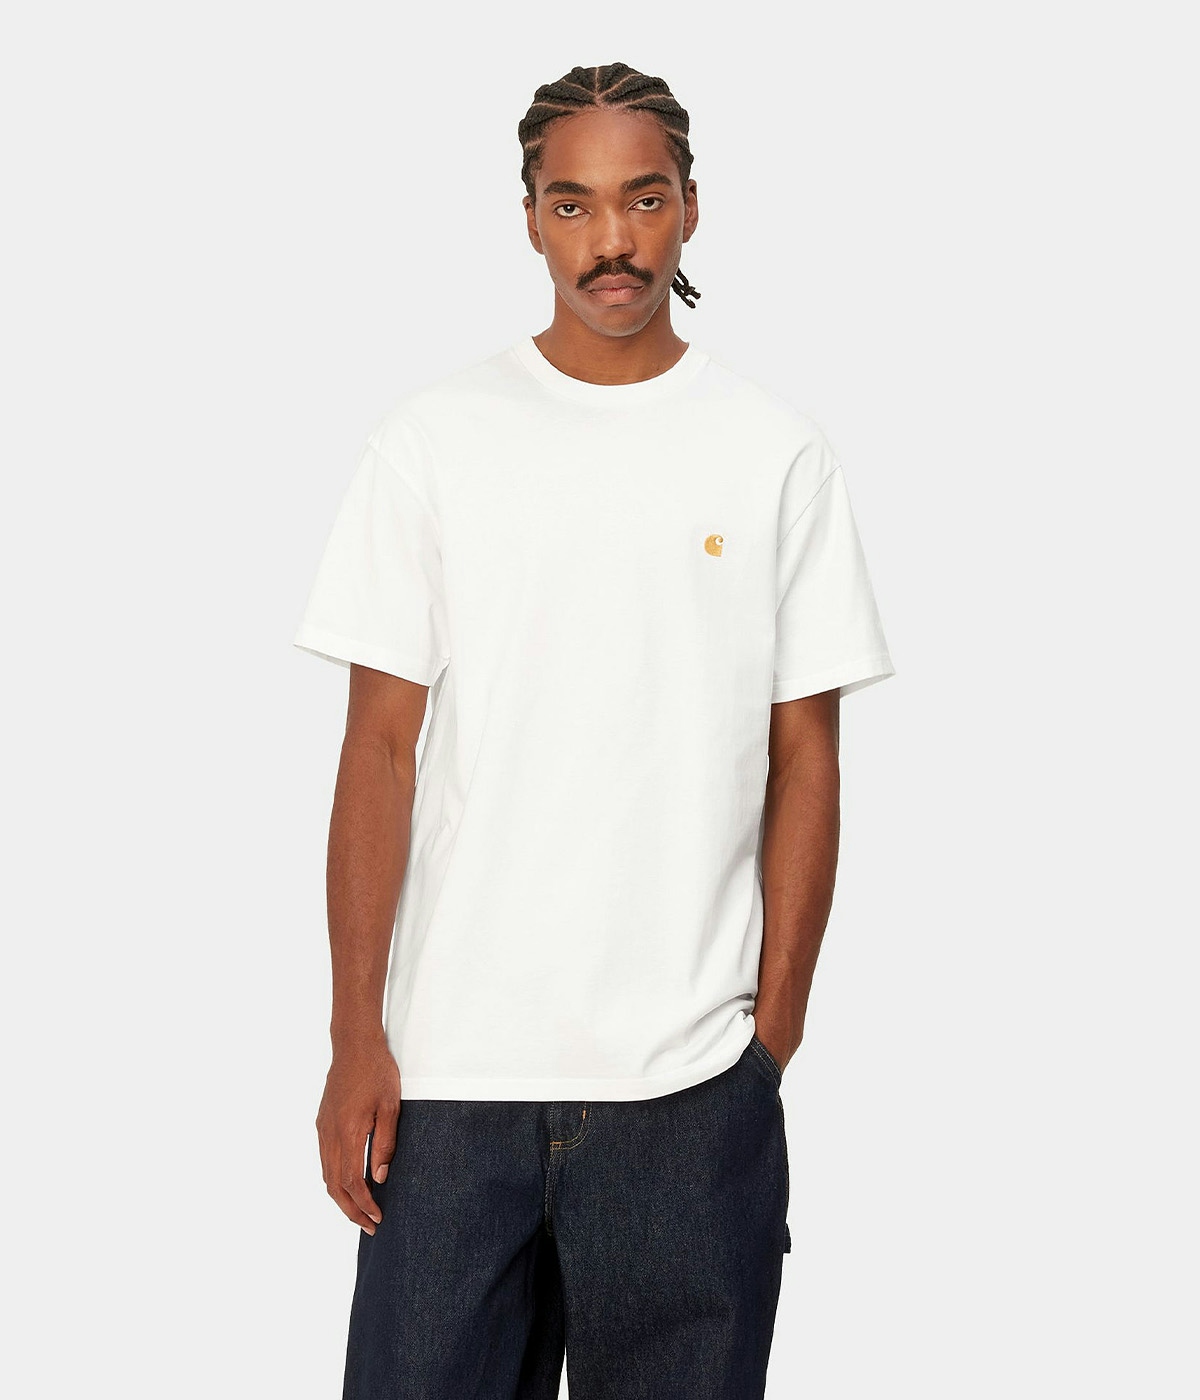 Carhartt T-shirt S/S Chase White/Gold